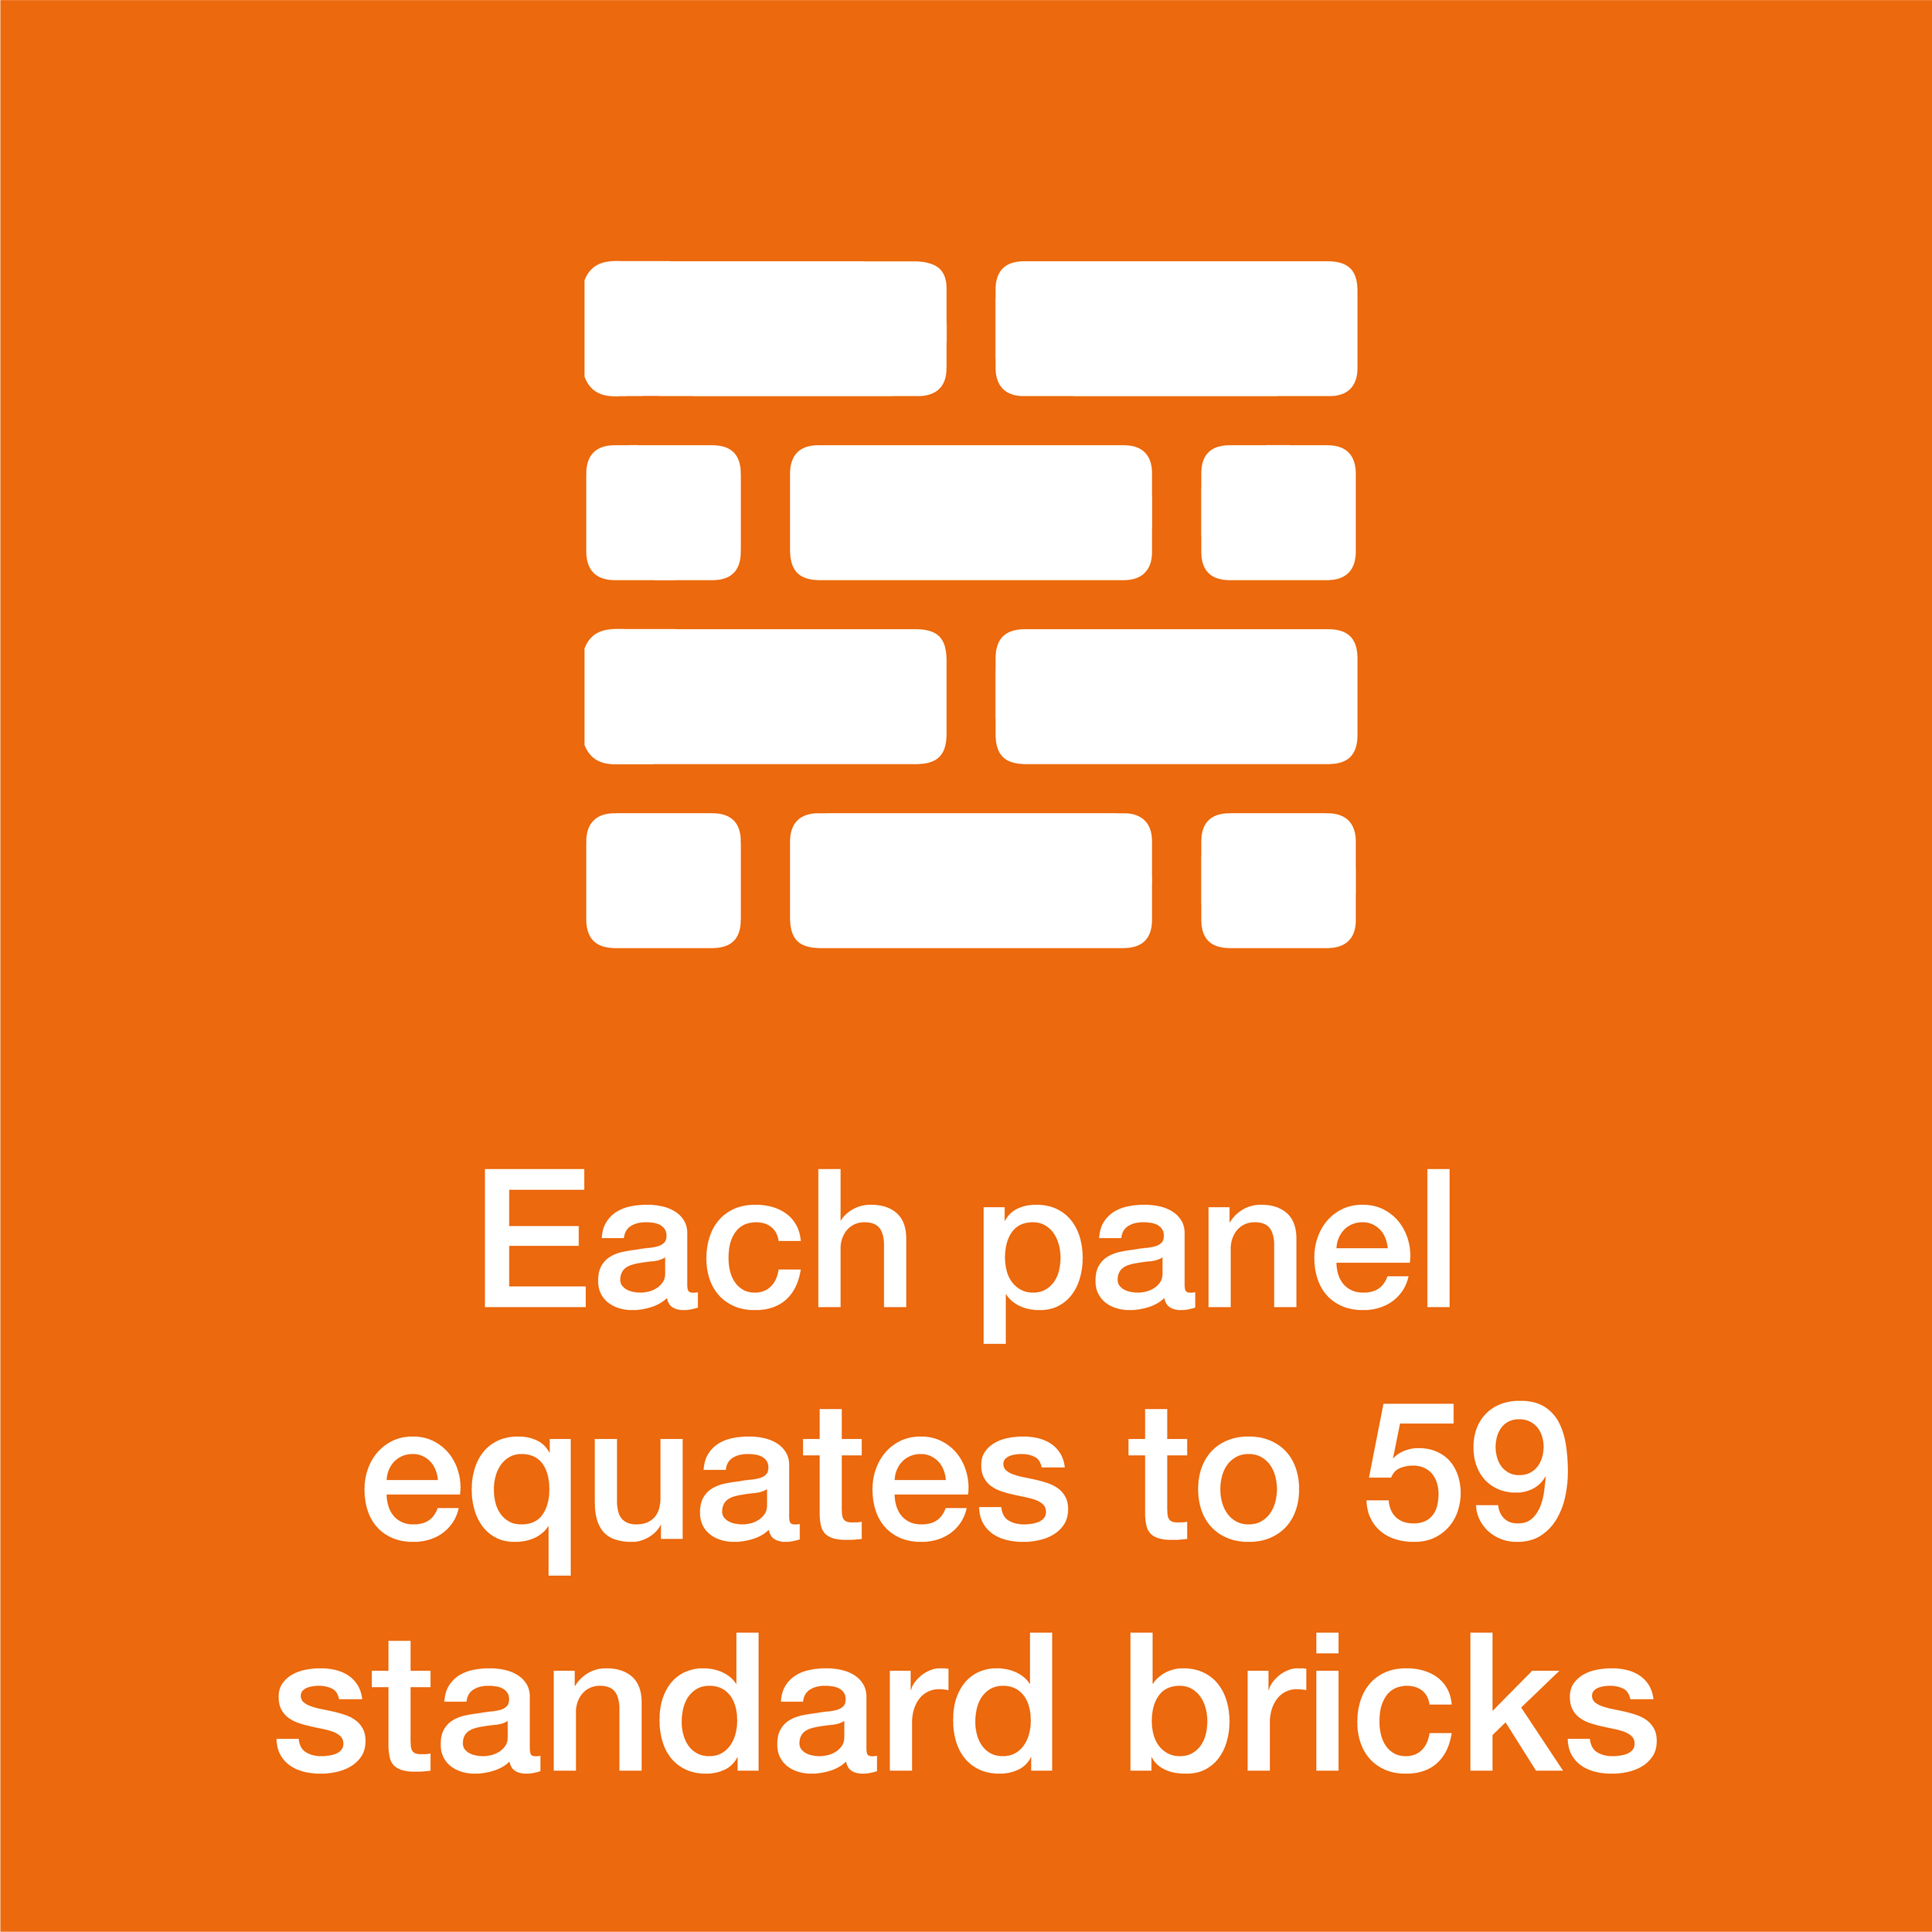  One Geneus37 panel equals to 59 standard bricks. 